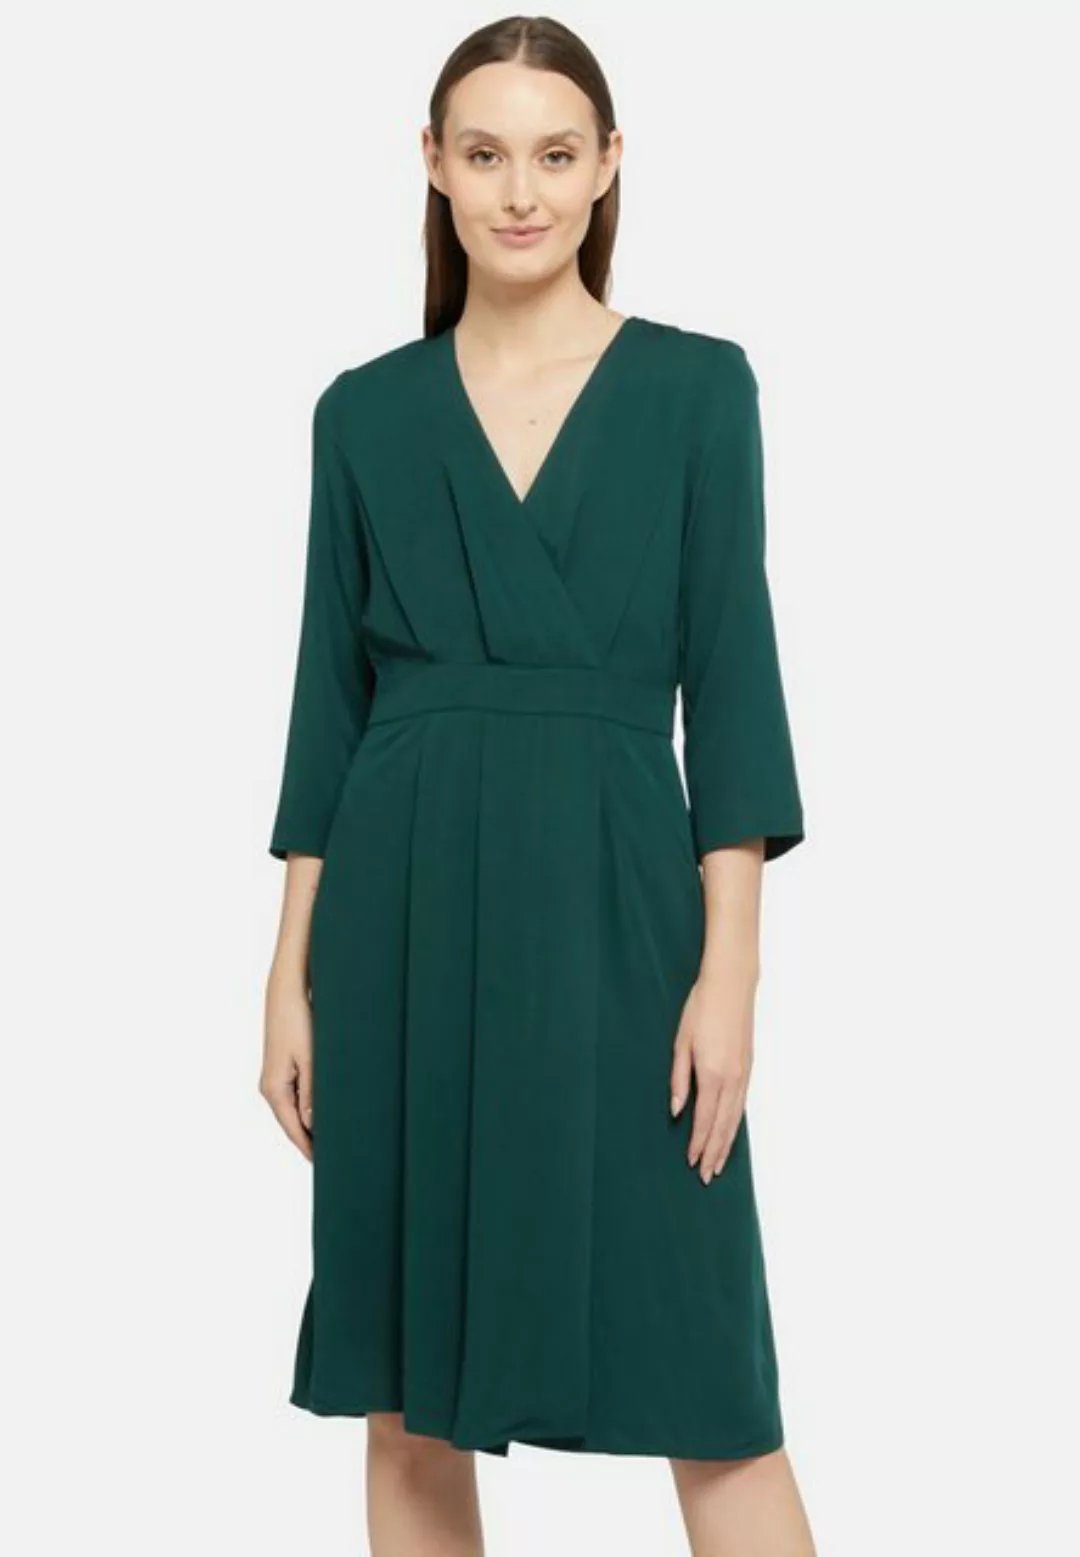 Lawrence Grey Midikleid Kleid günstig online kaufen